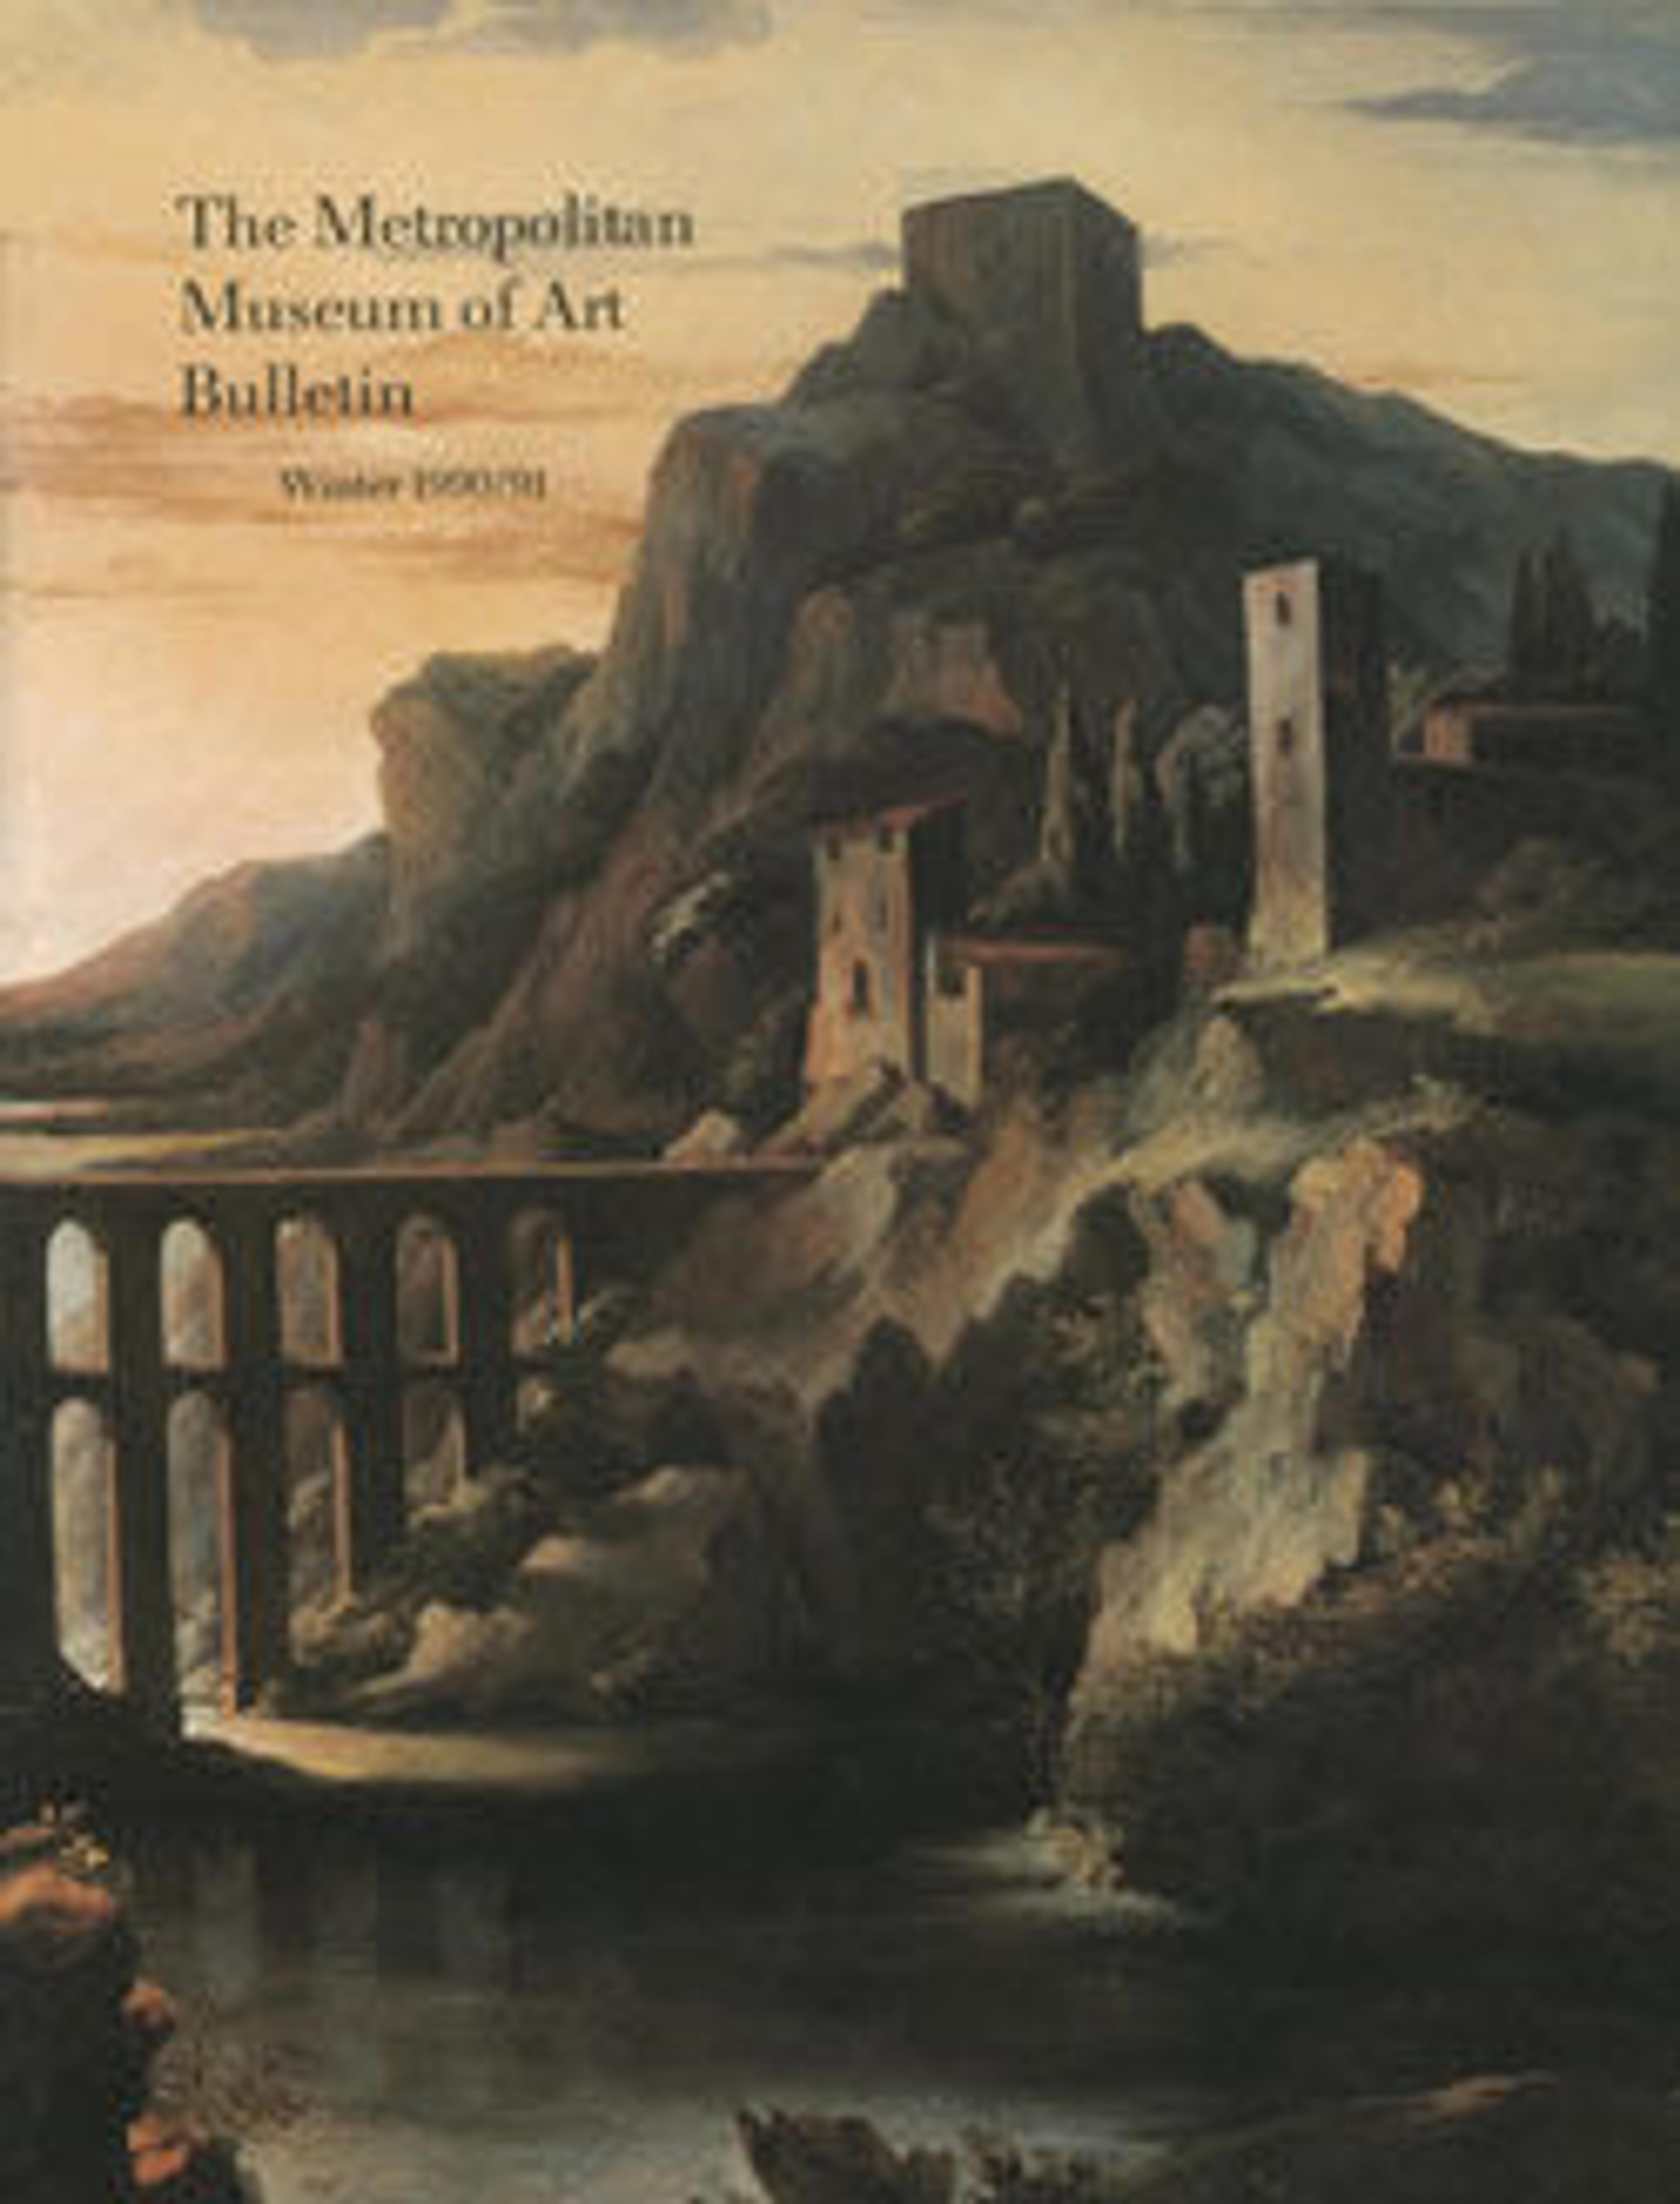 "Gericault's Heroic Landscapes": The Metropolitan Museum of Art Bulletin, v. 48, no. 3 (Winter, 1990-1991)